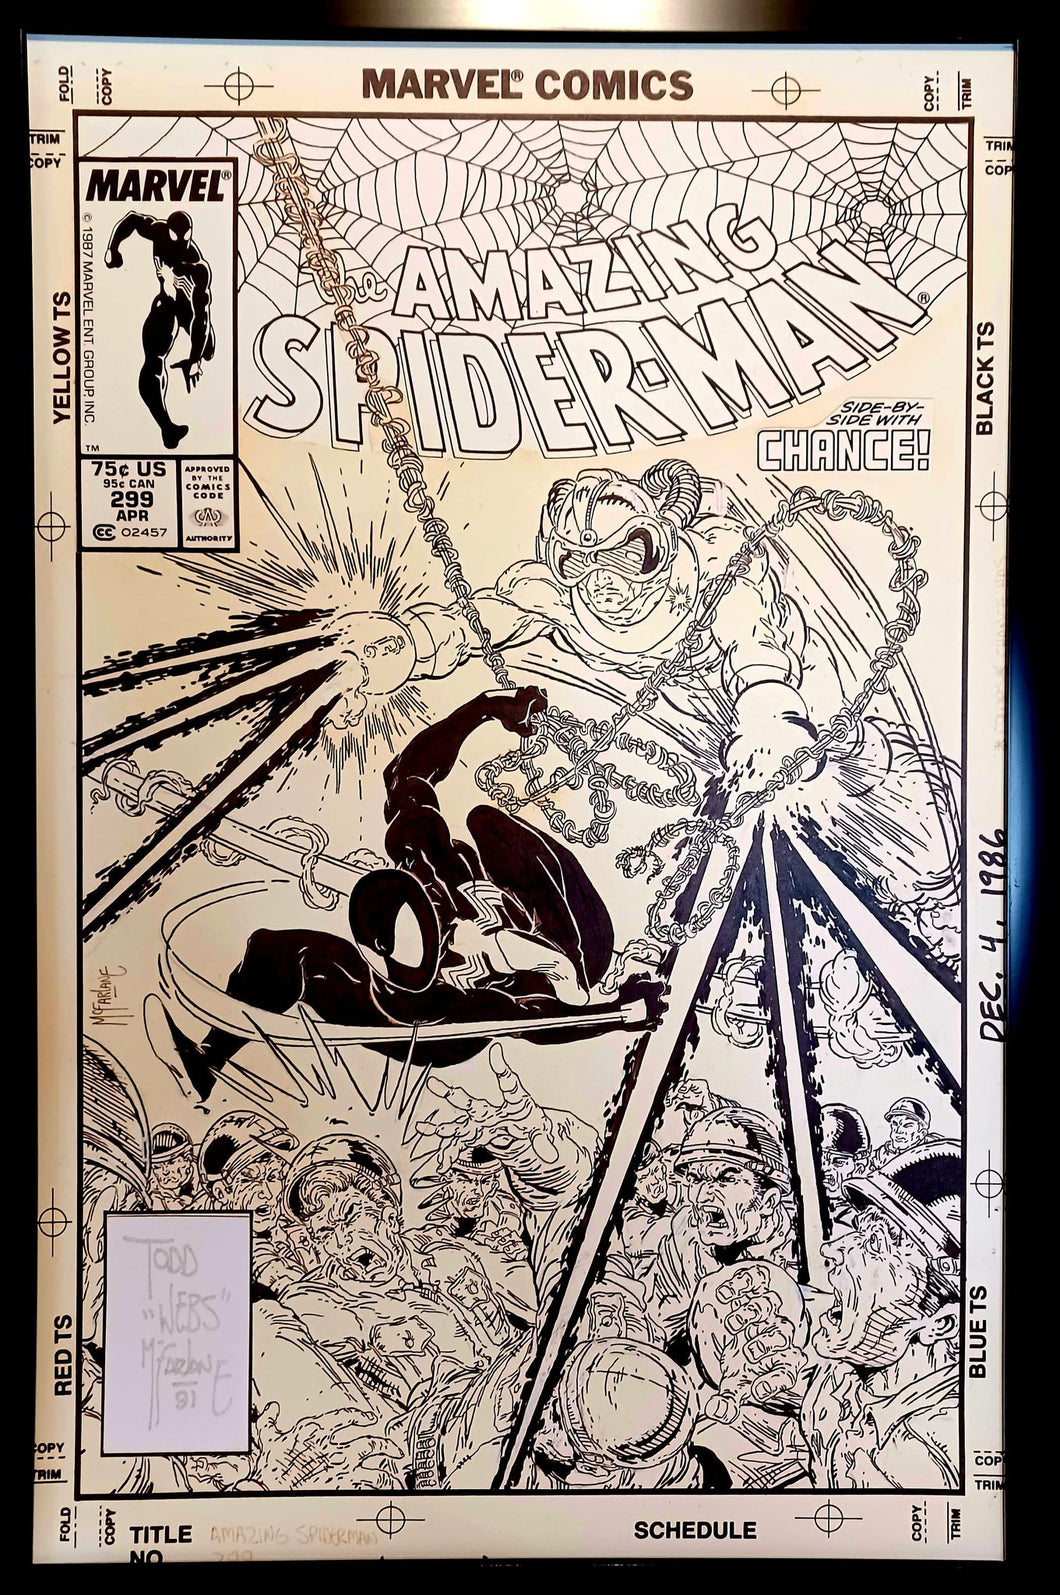 Amazing Spider-Man #299 by Todd McFarlane 11x17 FRAMED Original Art Print Comic Poster